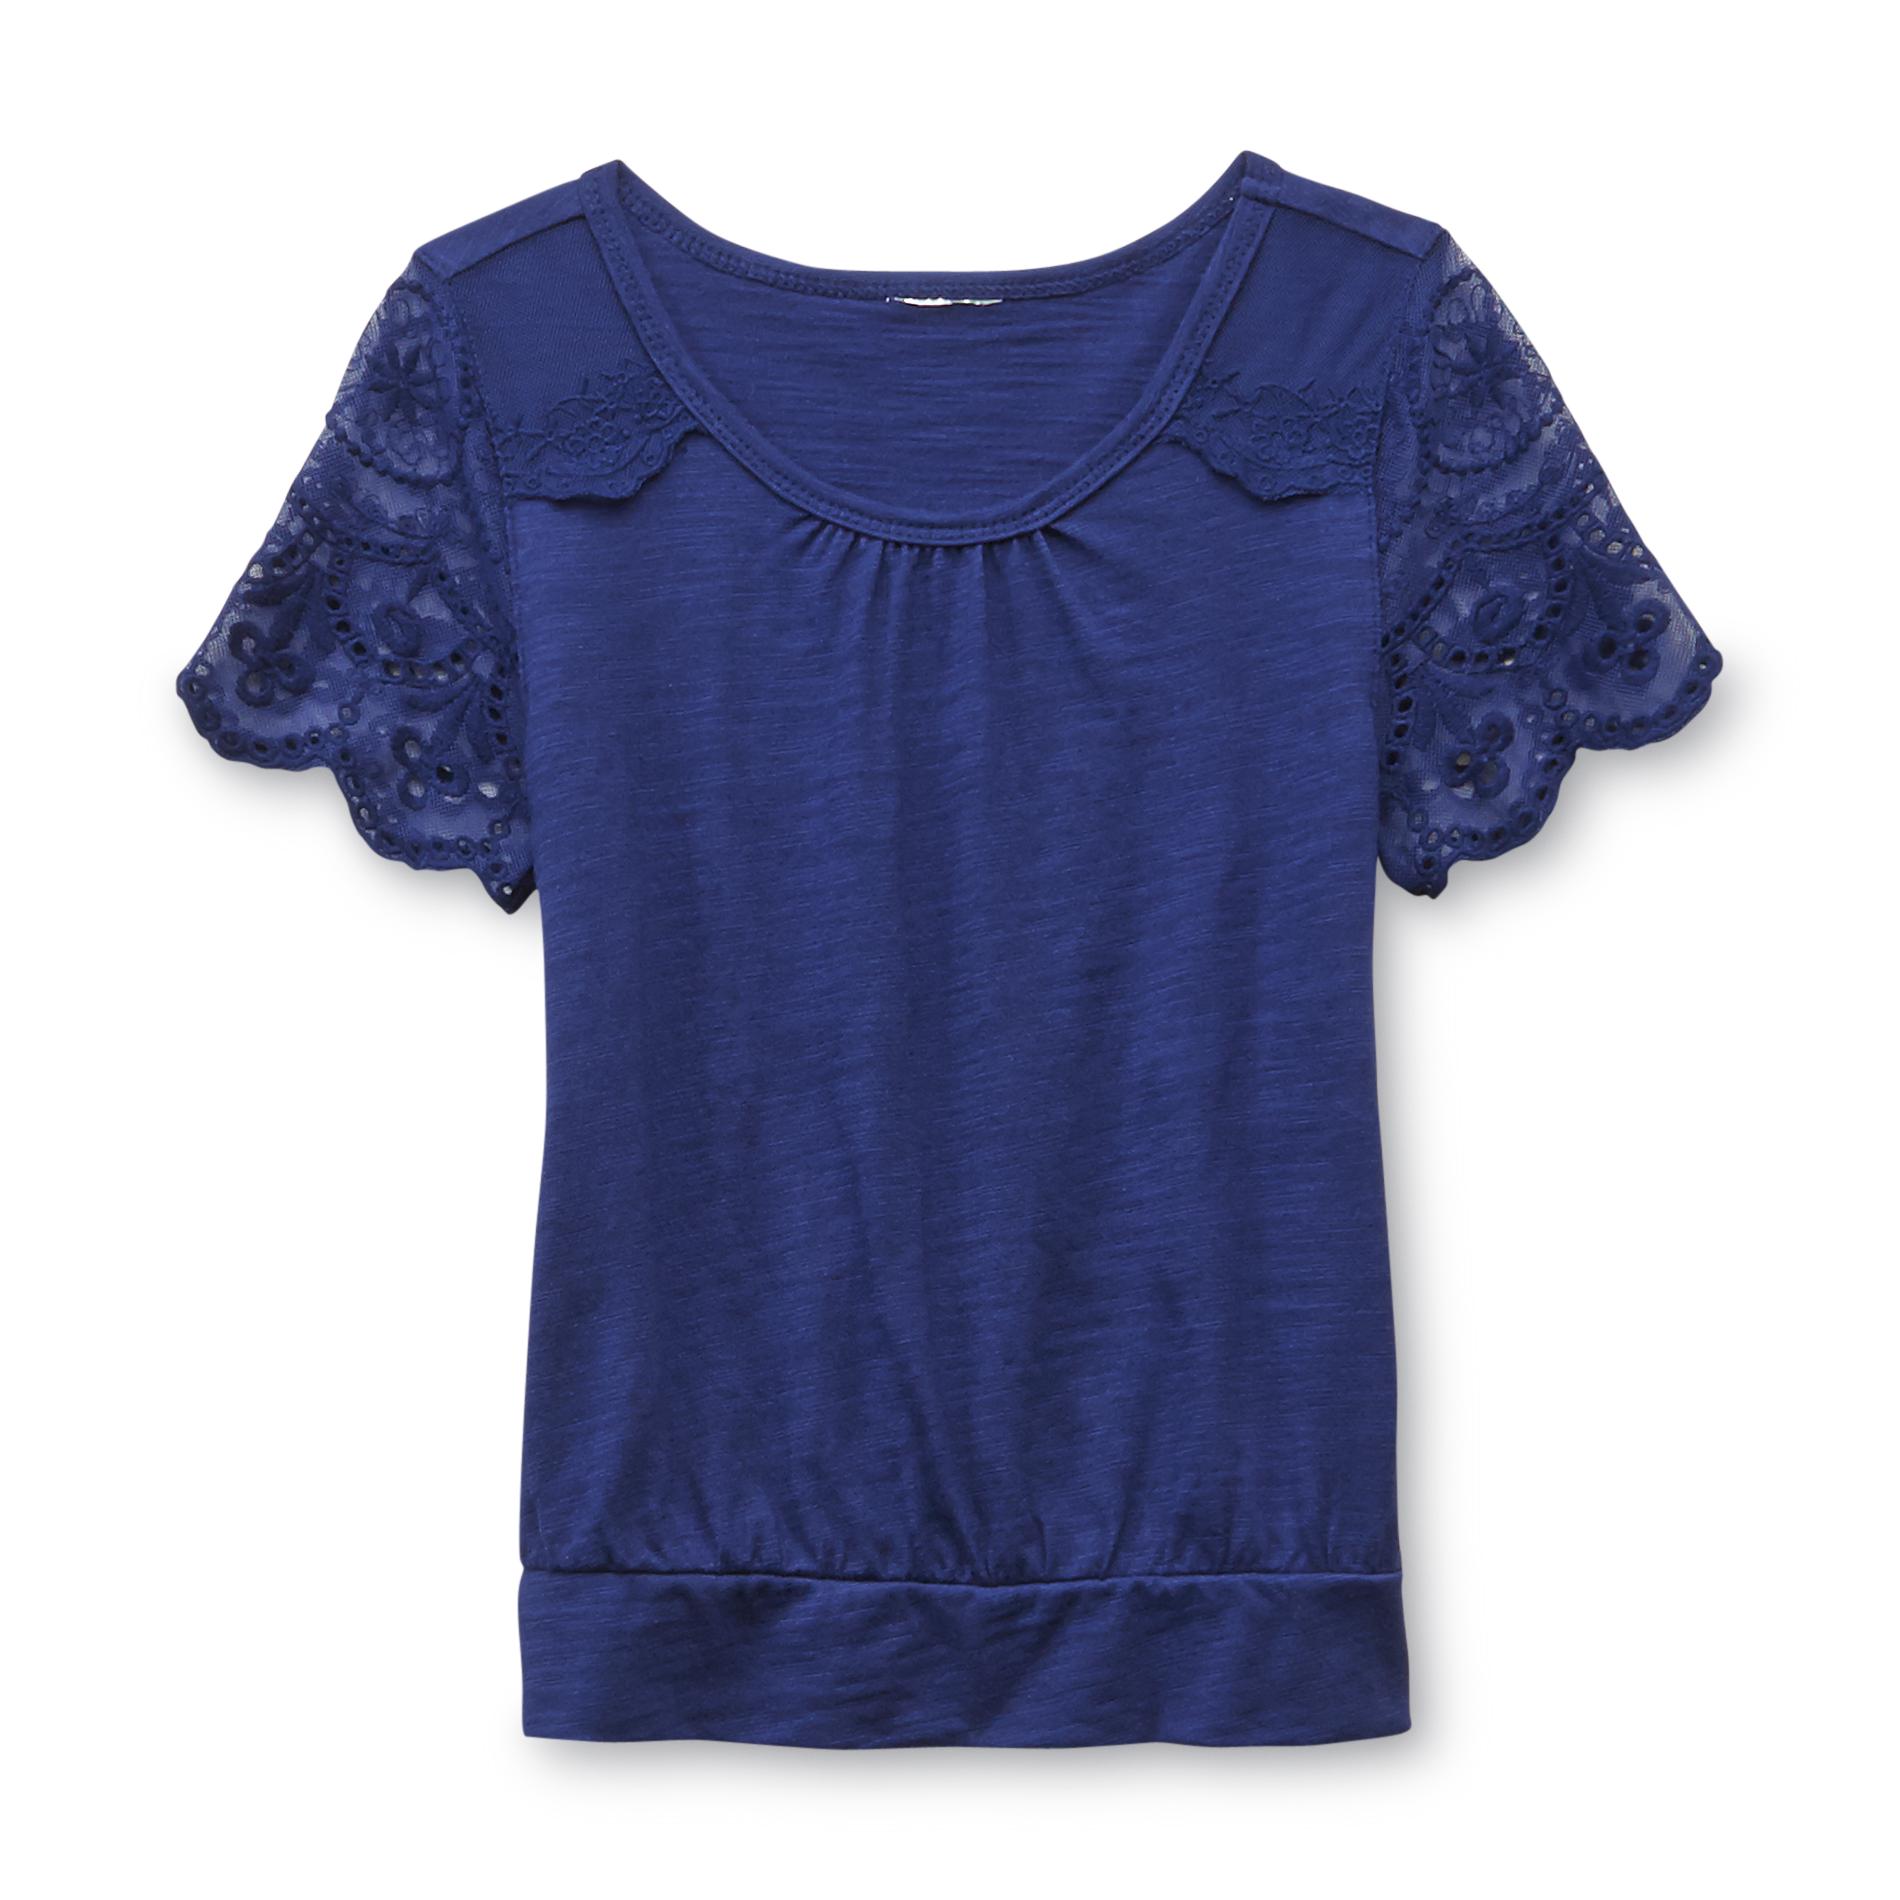 Toughskins Girl's Lace Sleeve T-Shirt